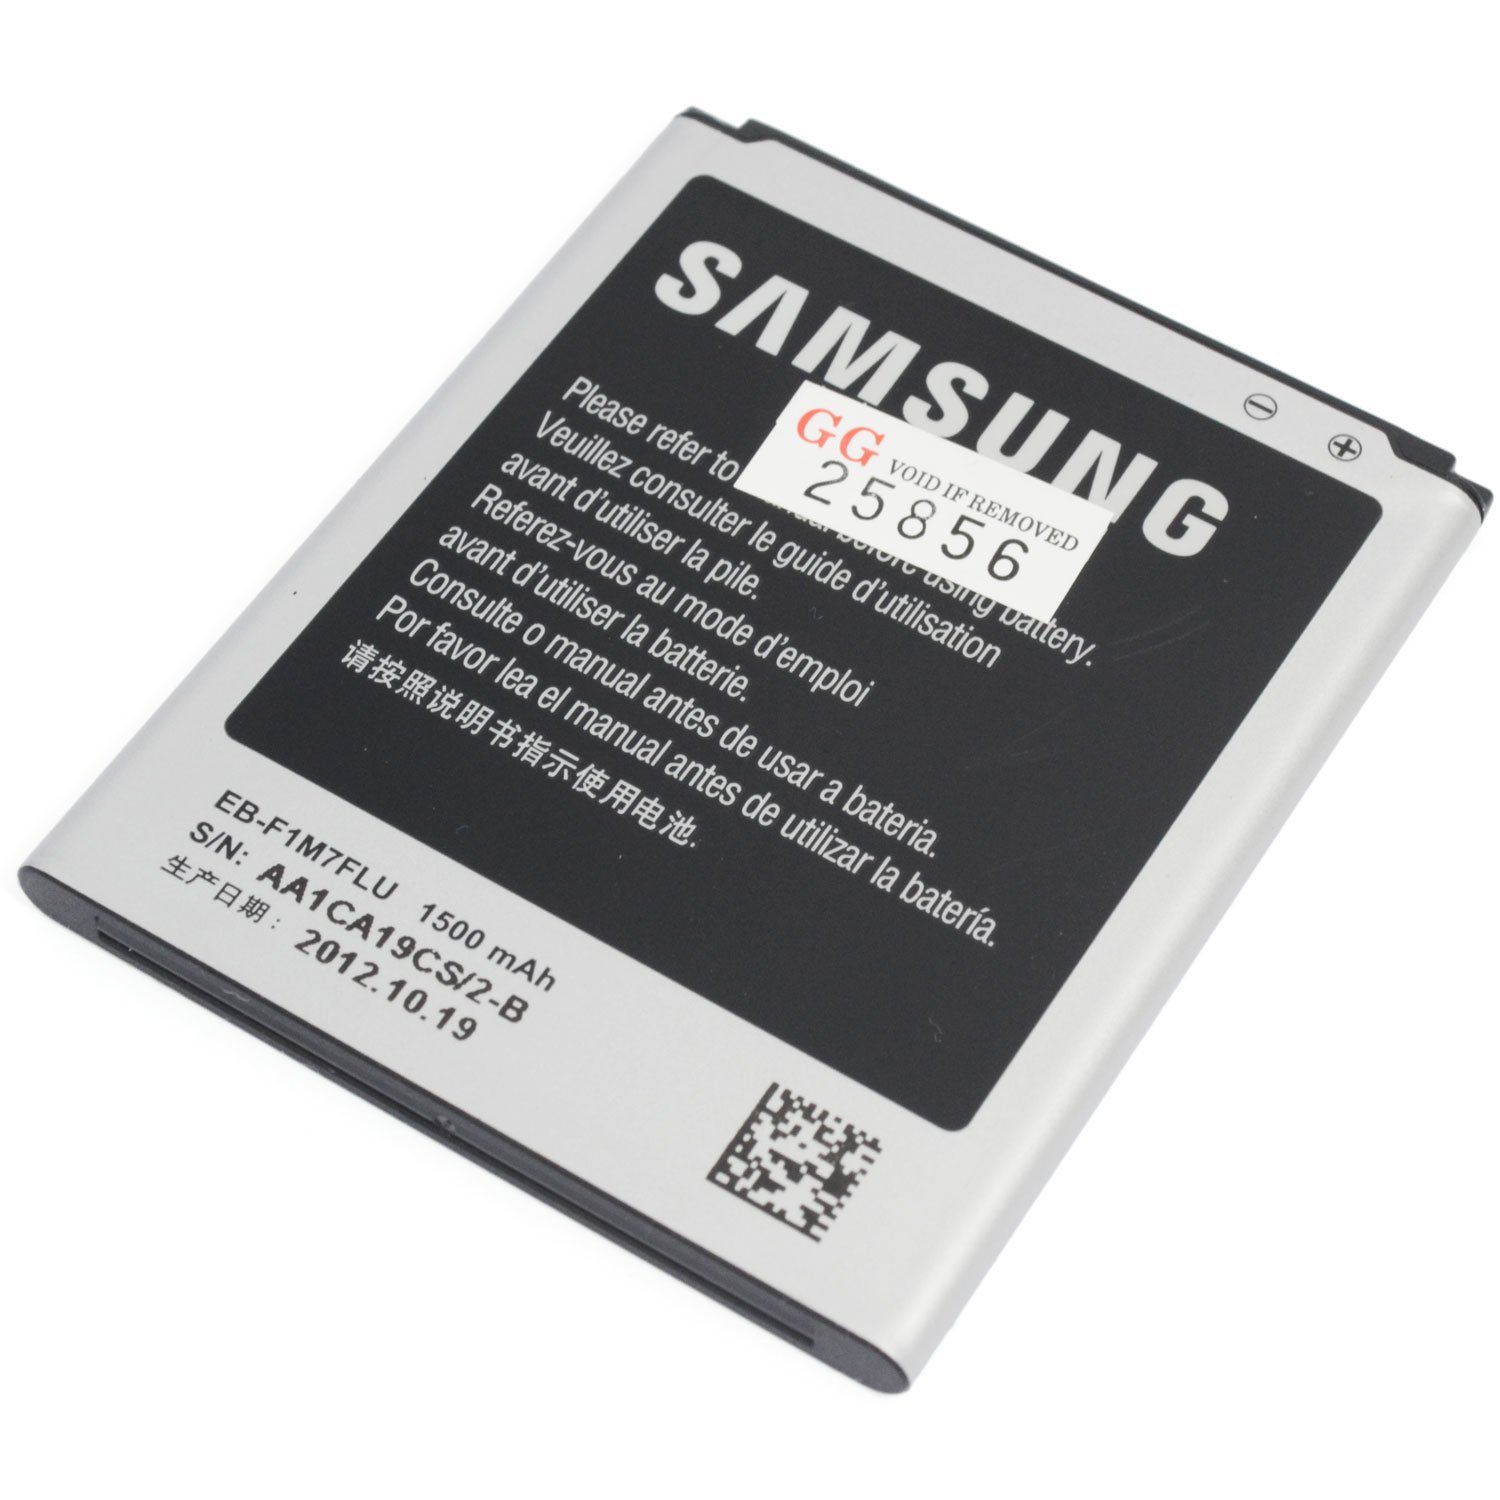 Samsung EB-F1M7FLU Battery for Galaxy S3 mini - Original OEM - Non-Retail Packaging - Grey. 1500mAh